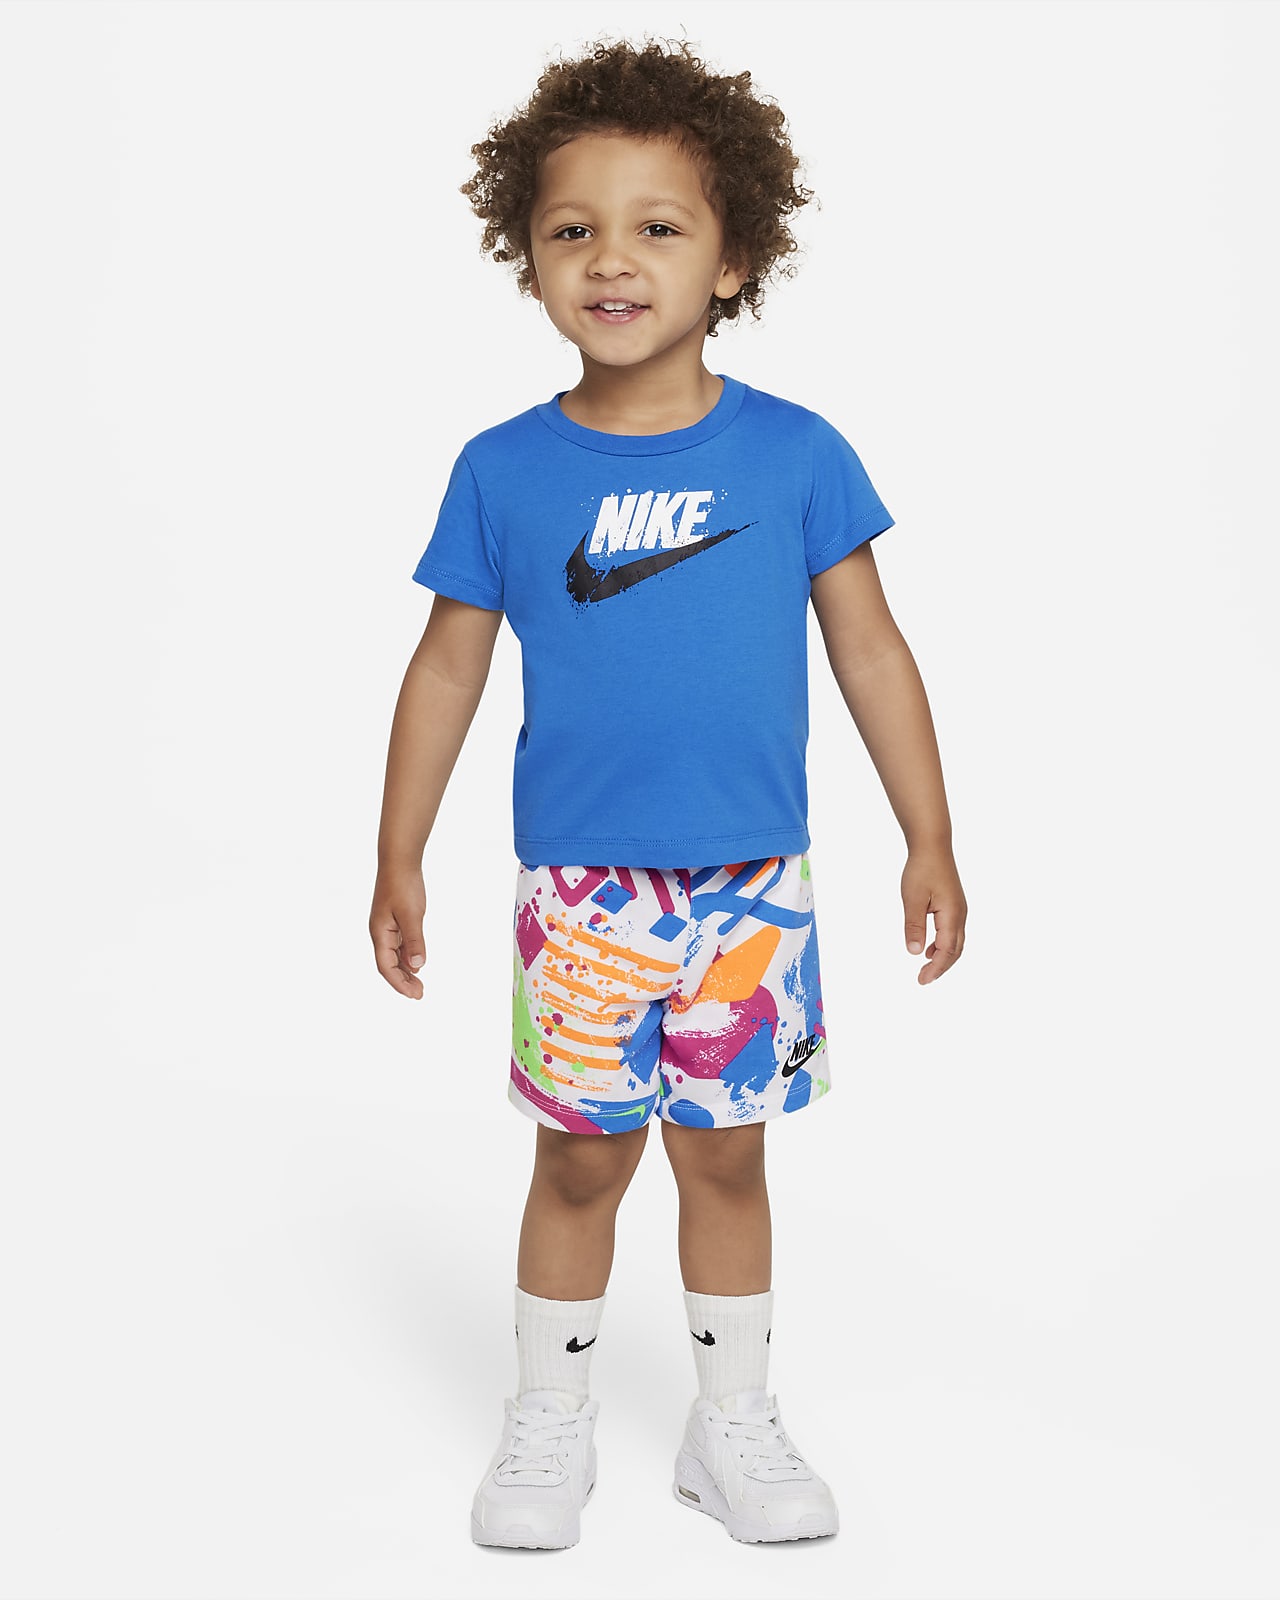 grind Almachtig kiezen Nike Sportswear Baby (12-24M) T-Shirt and Shorts Set. Nike.com